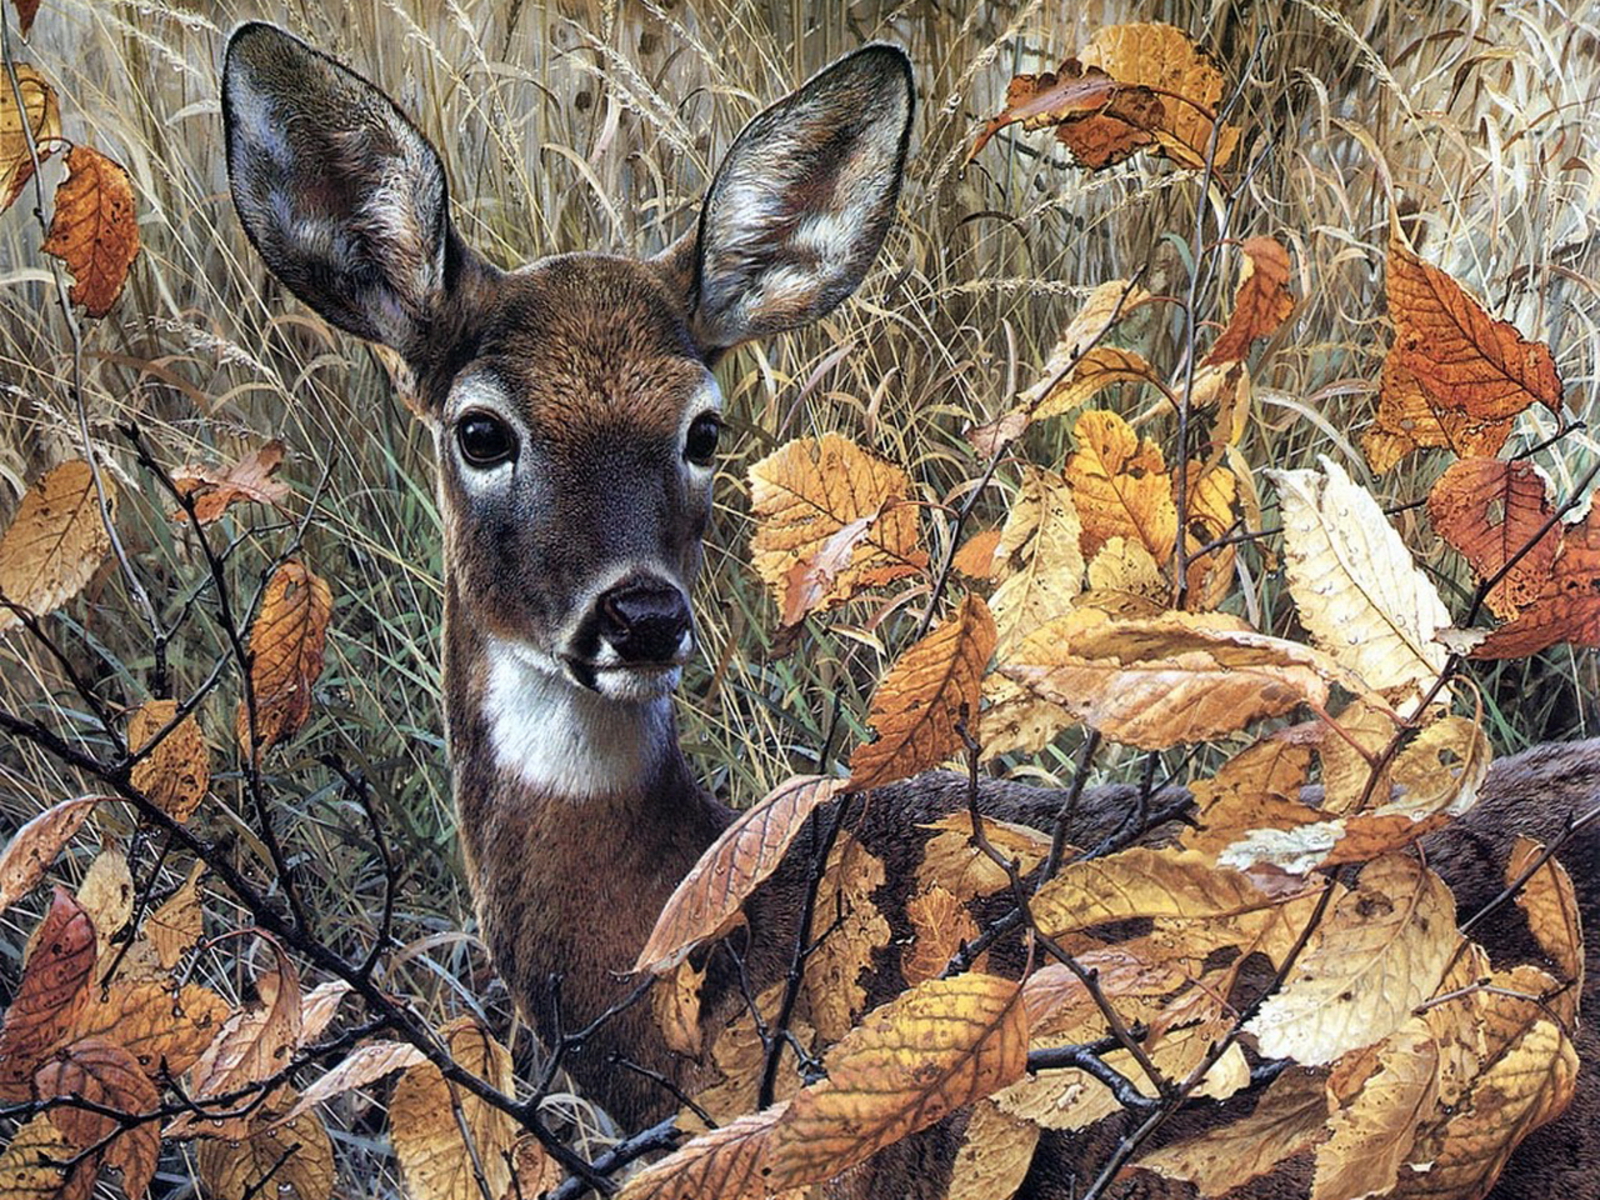  wallpaper deer hunting backgrounds deer hunting wallpaper for computer